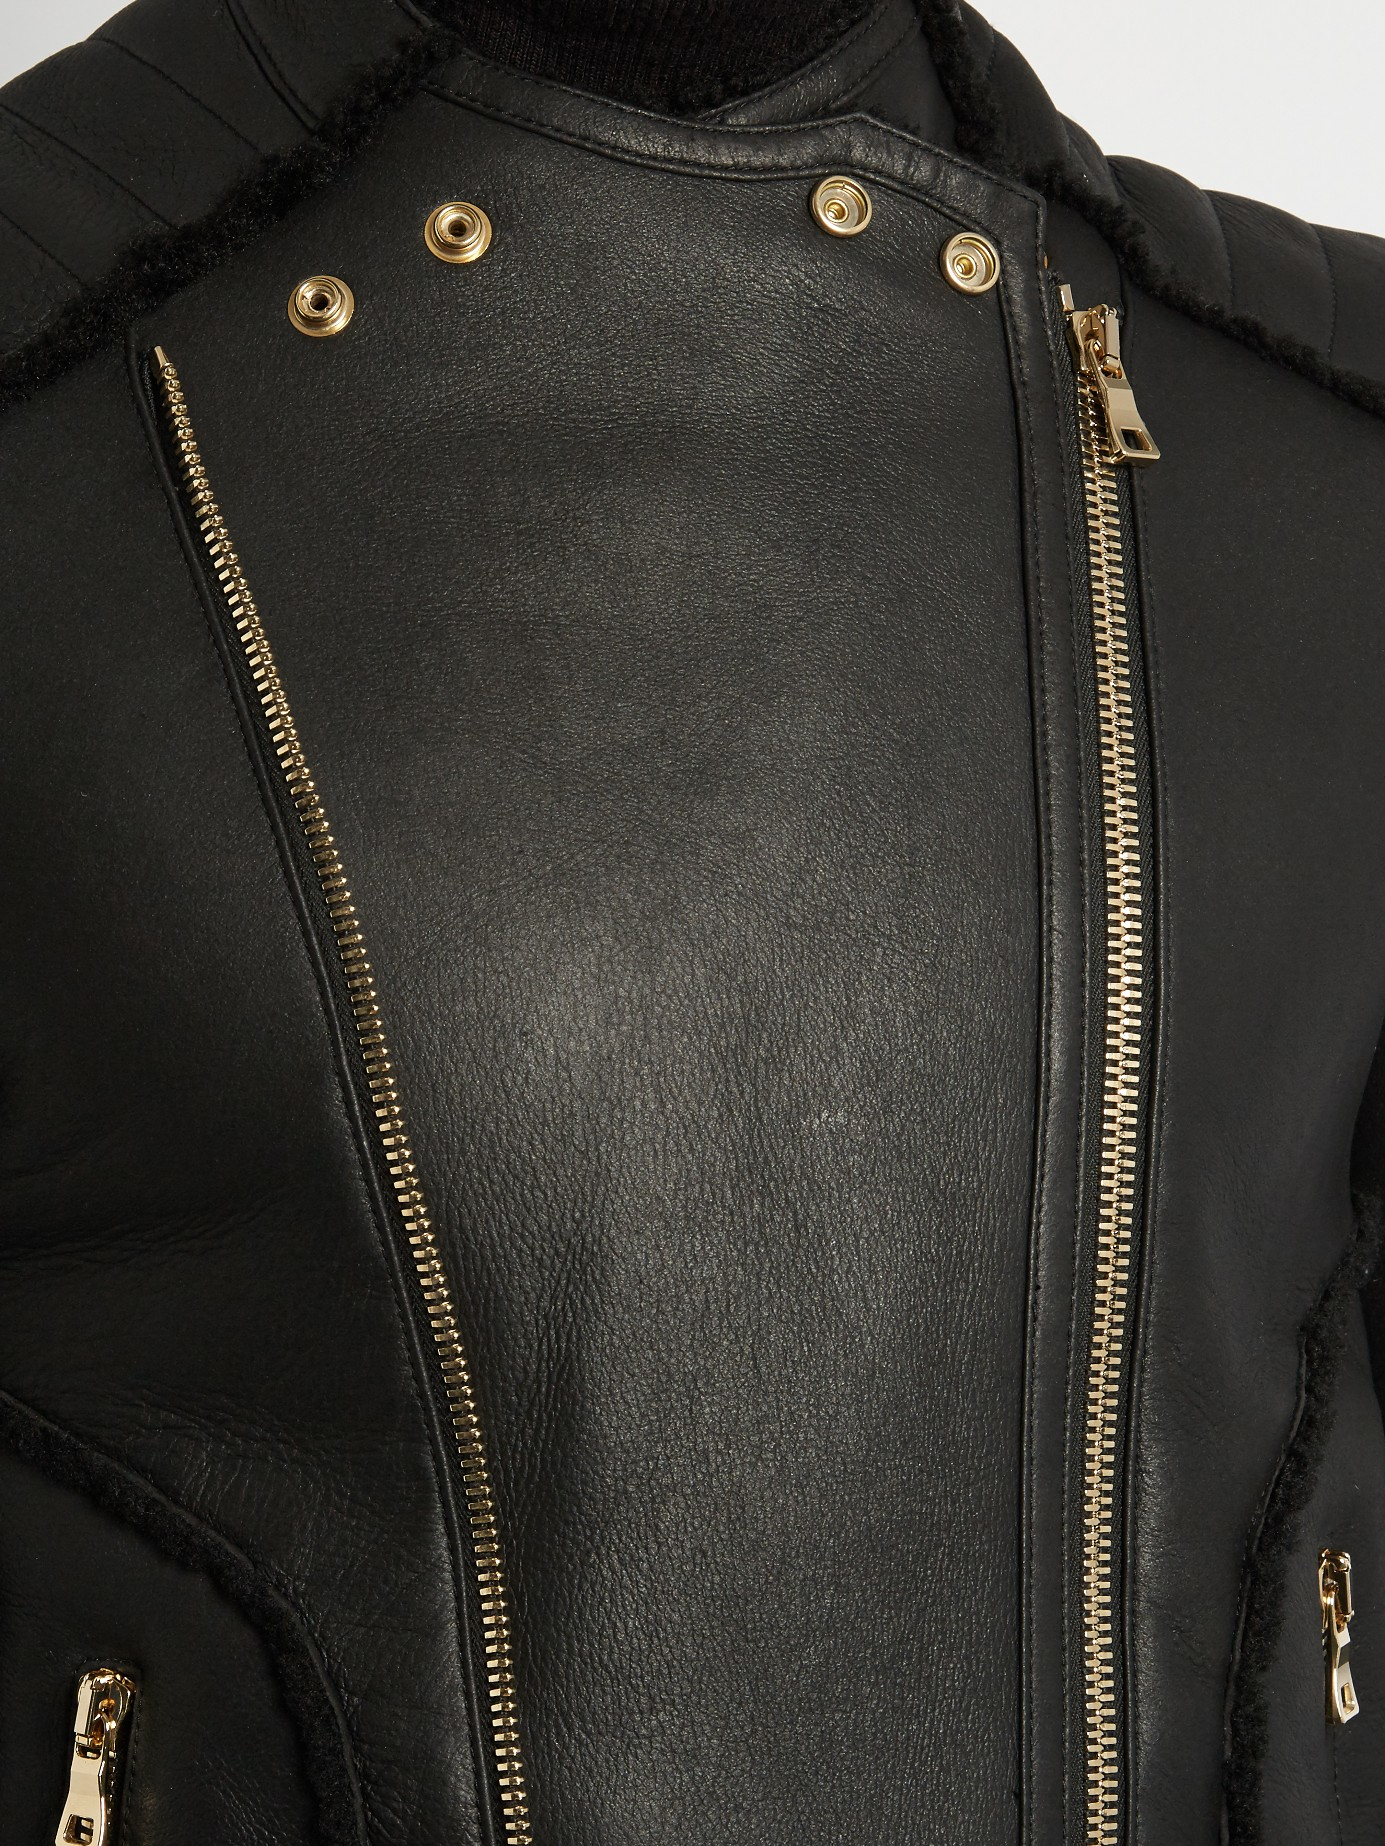 Legitim Gooey opadgående Balmain Leather Shearling Biker Jacket in Black for Men - Lyst